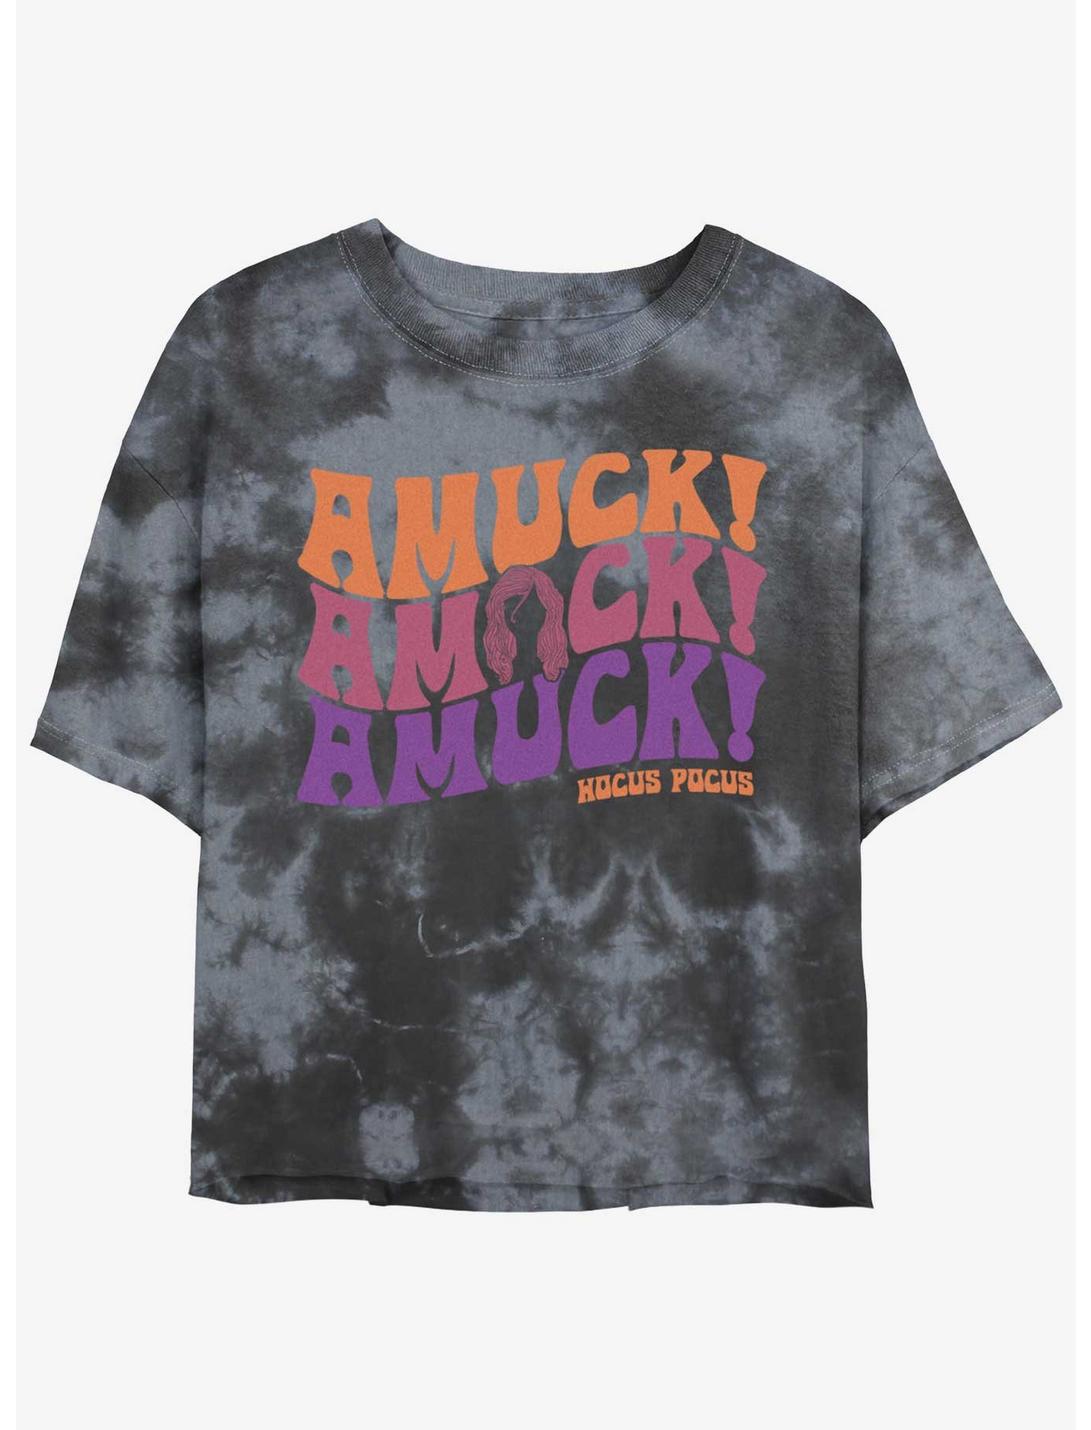 Disney Hocus Pocus Amuck, Amuck, Amuck! Tie-Dye Girls Crop T-Shirt, BLKCHAR, hi-res